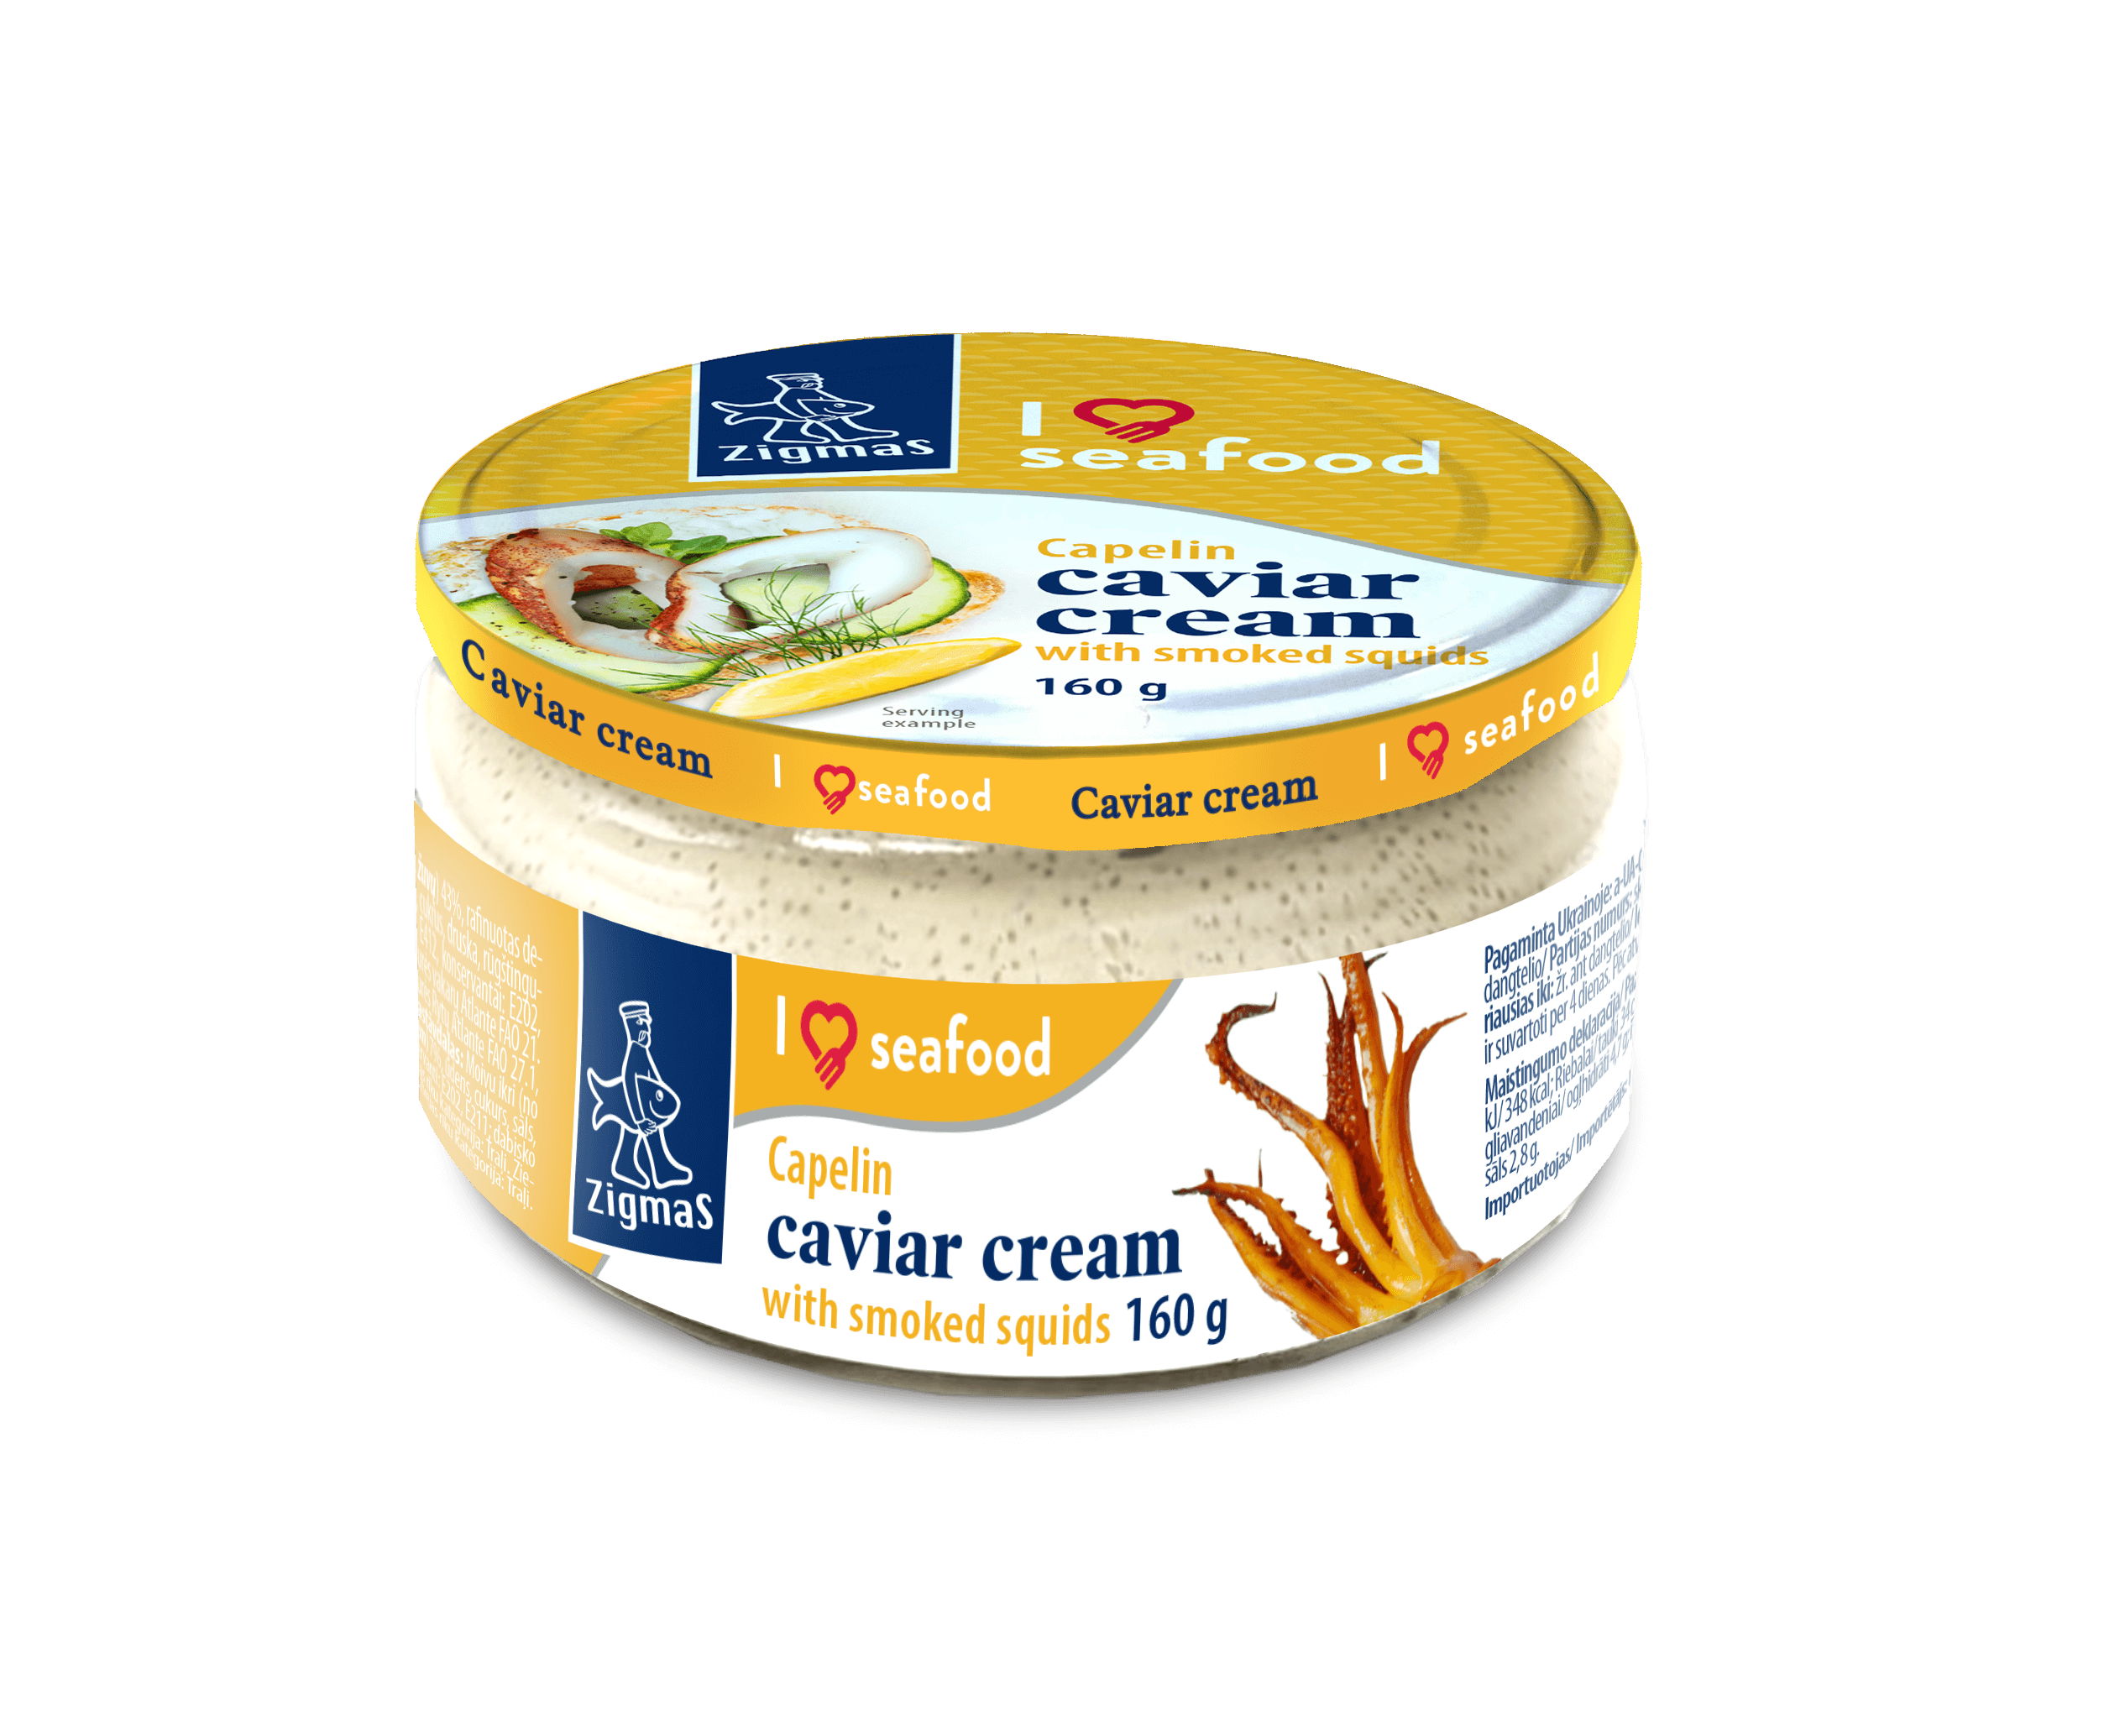 Capelin caviar cream with smoked squid